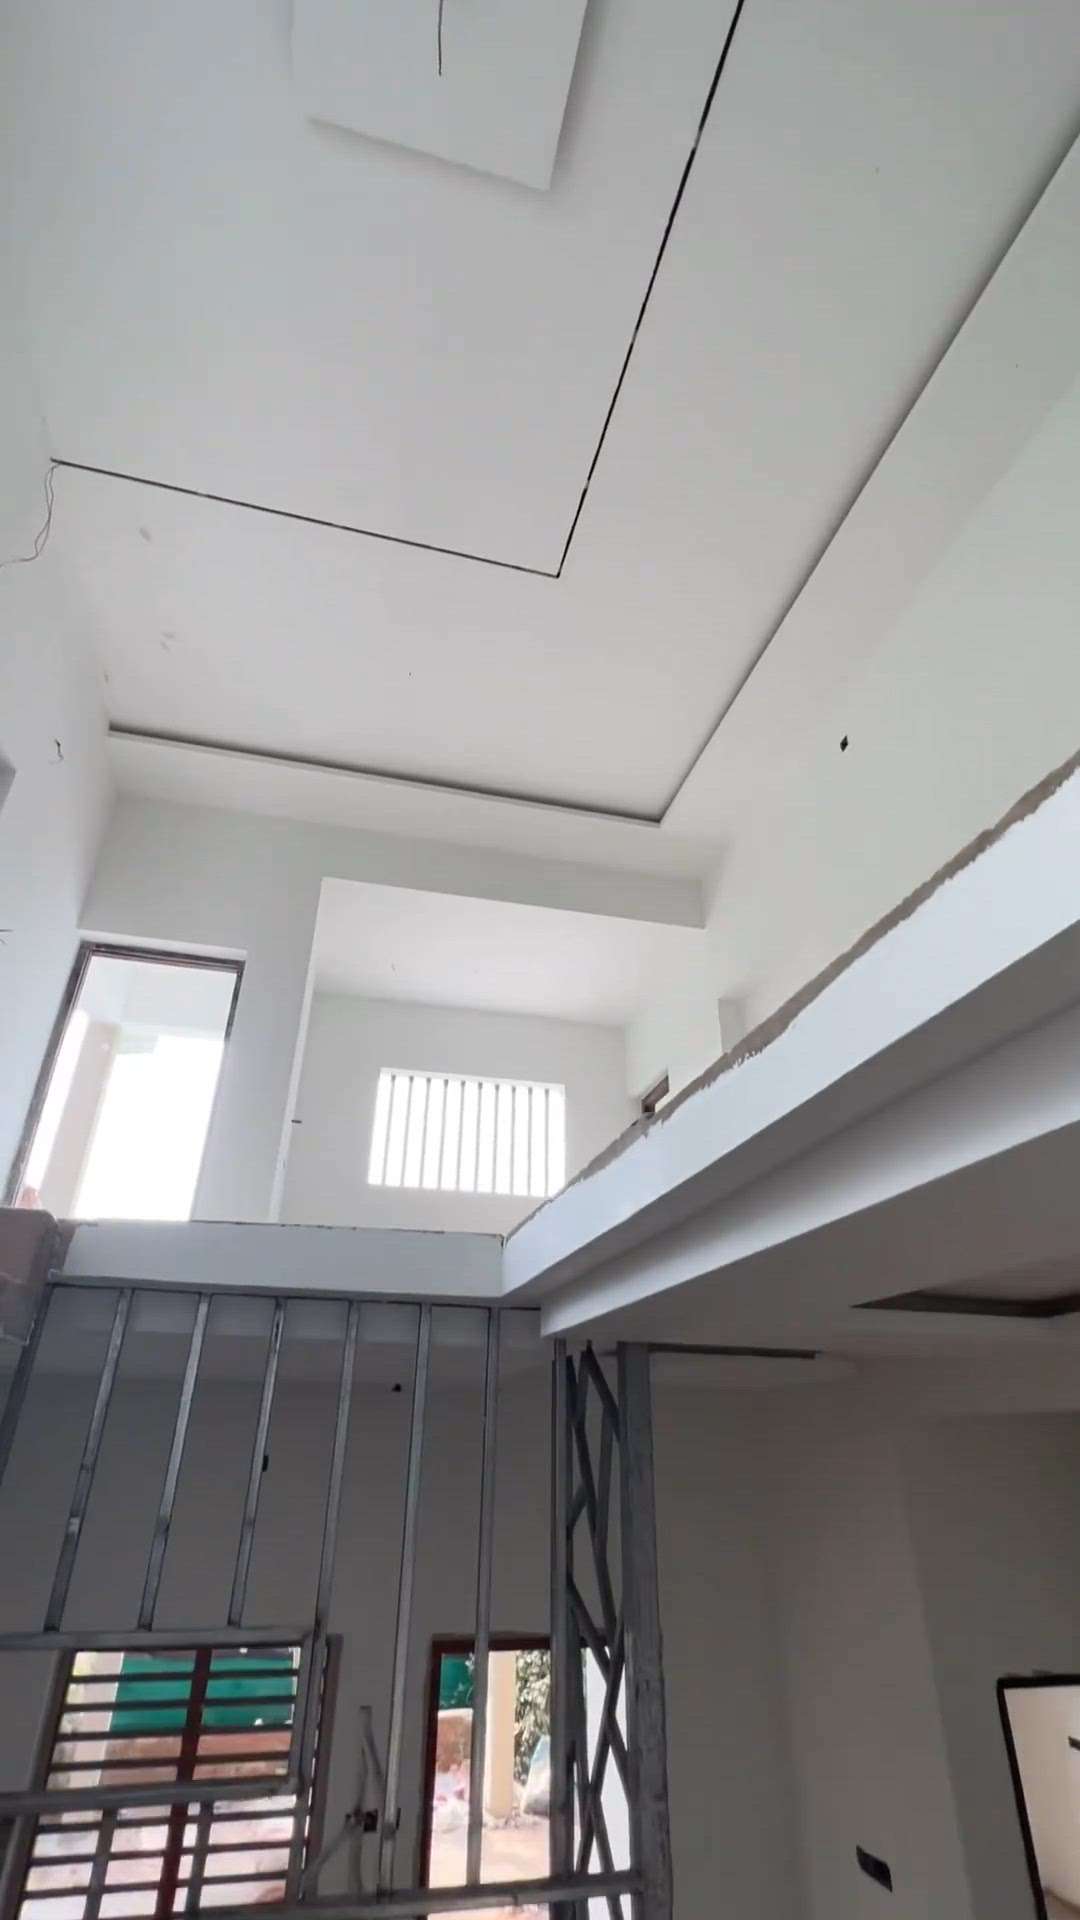 Gypsum false ceiling #GypsumCeiling #gypsumdesign #GridCeiling #PVCFalseCeiling #InteriorDesigner #interiorrenovation